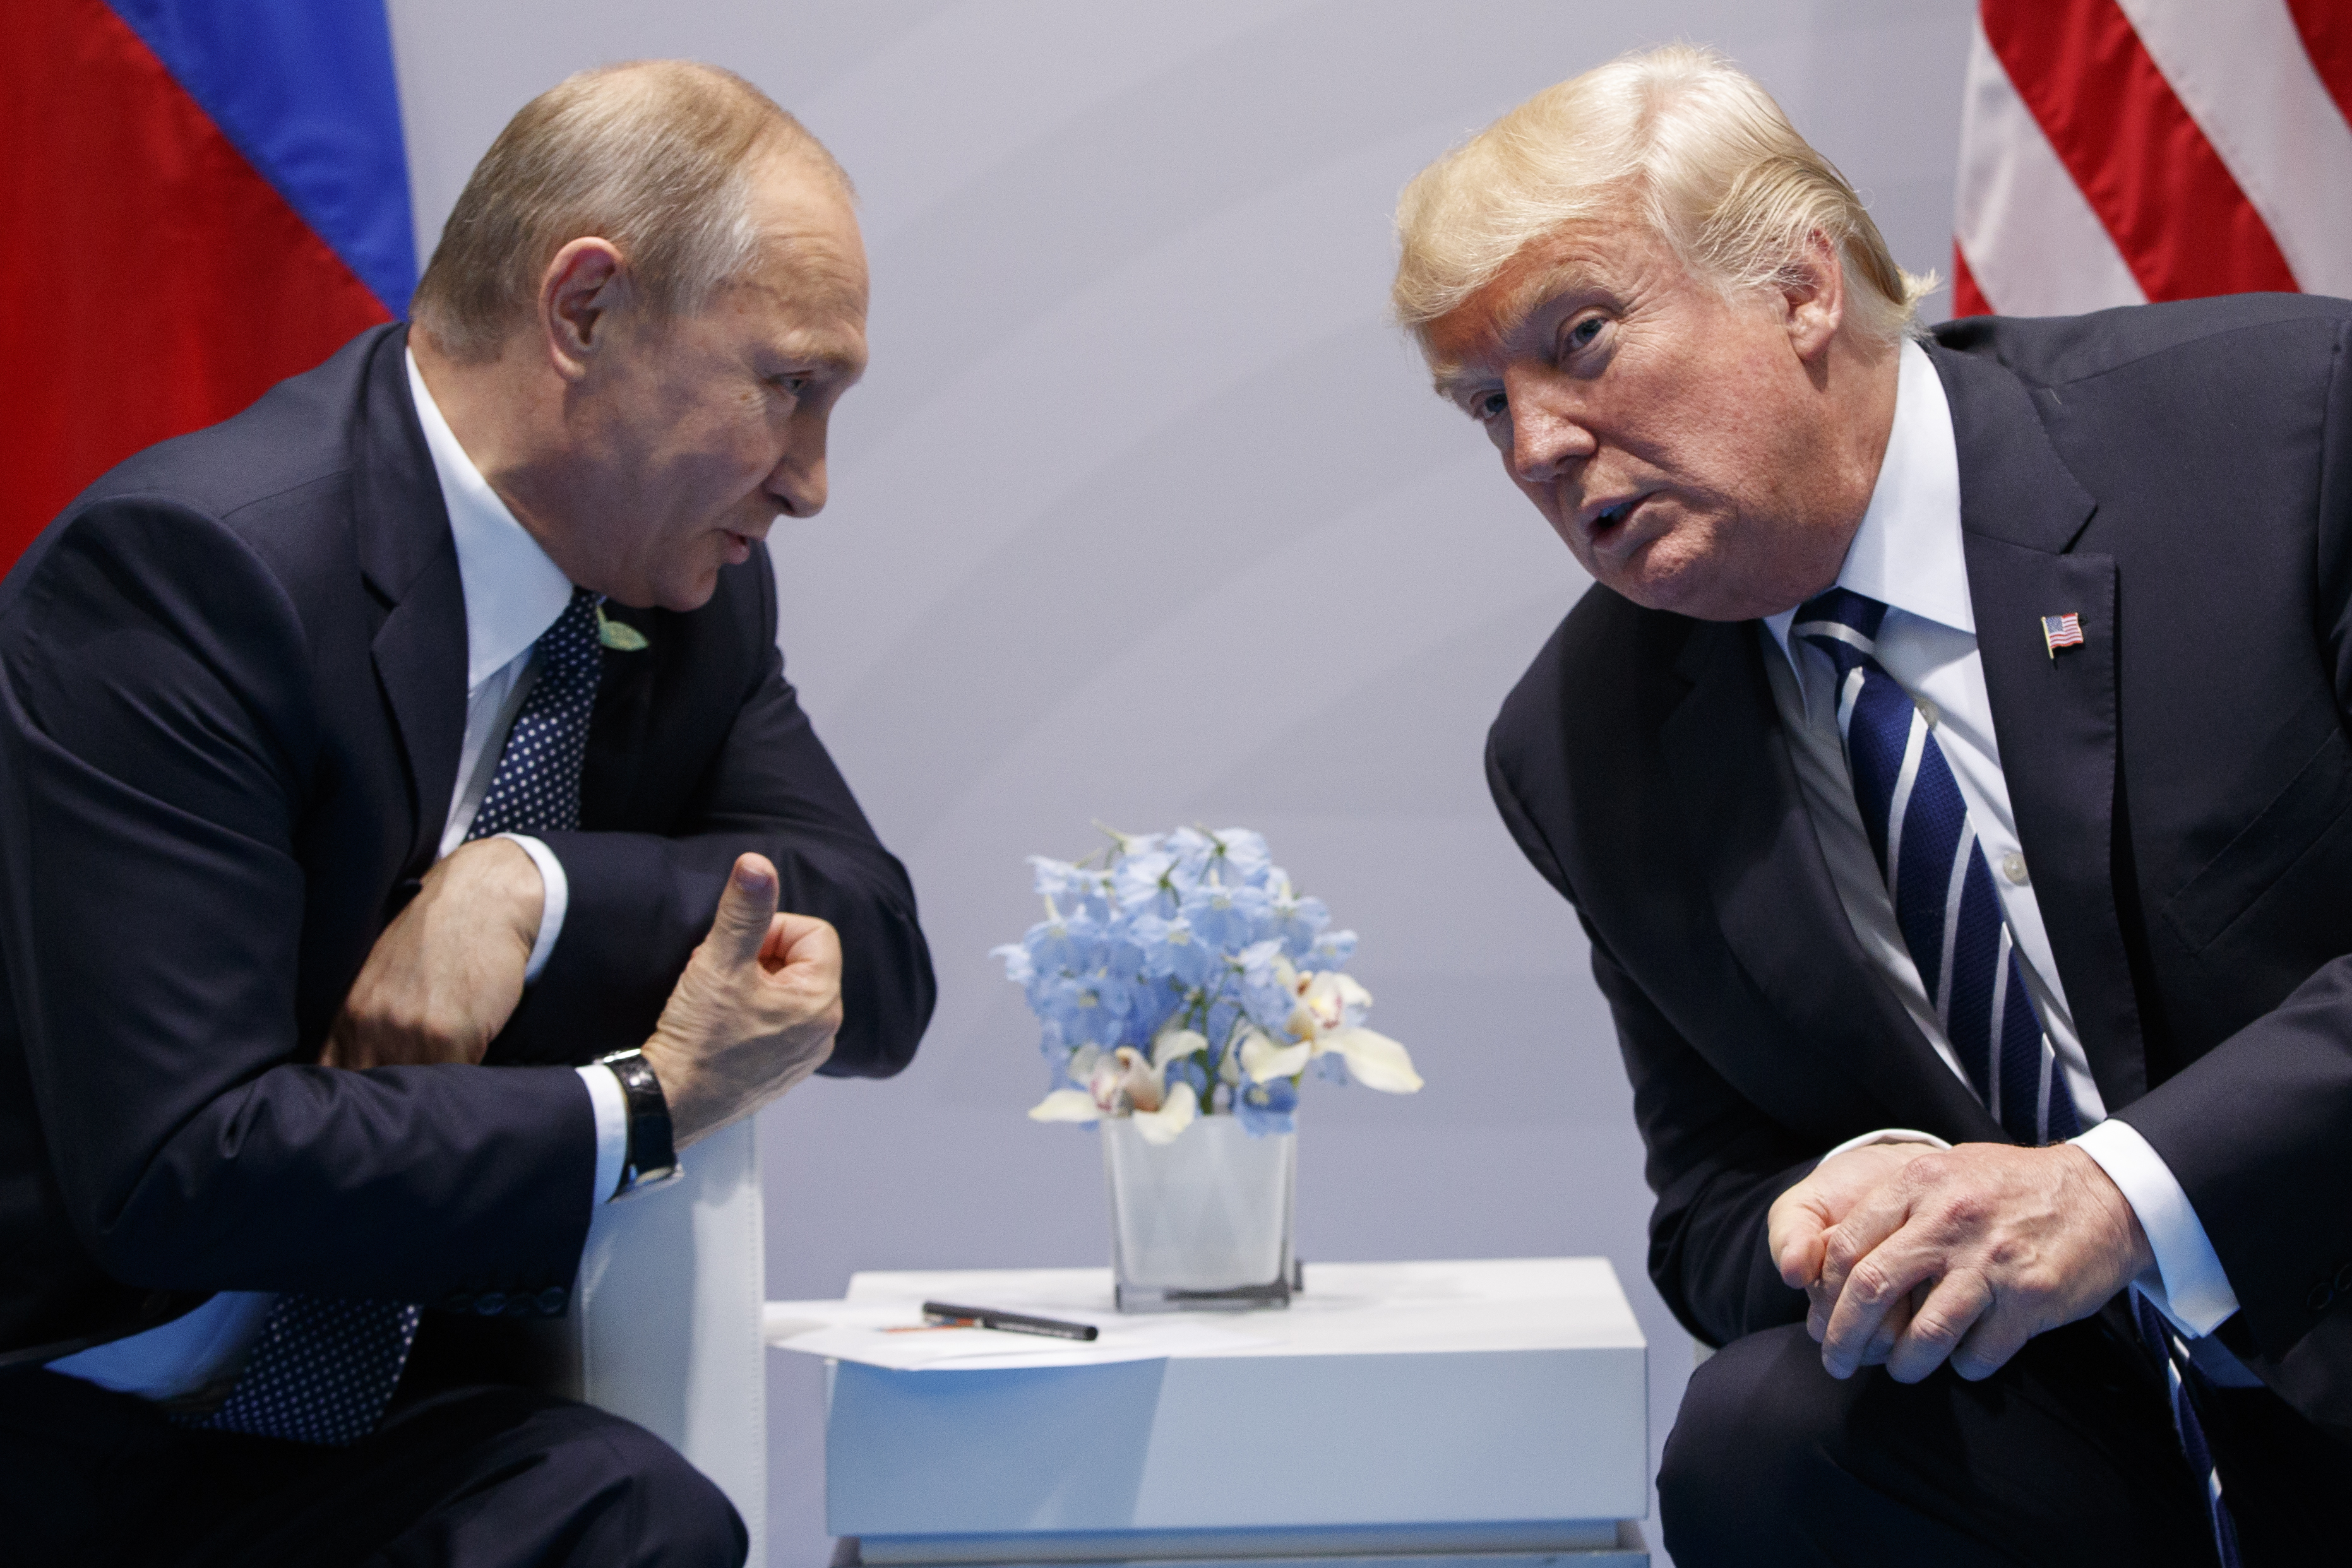 President Putin meets President Trump.